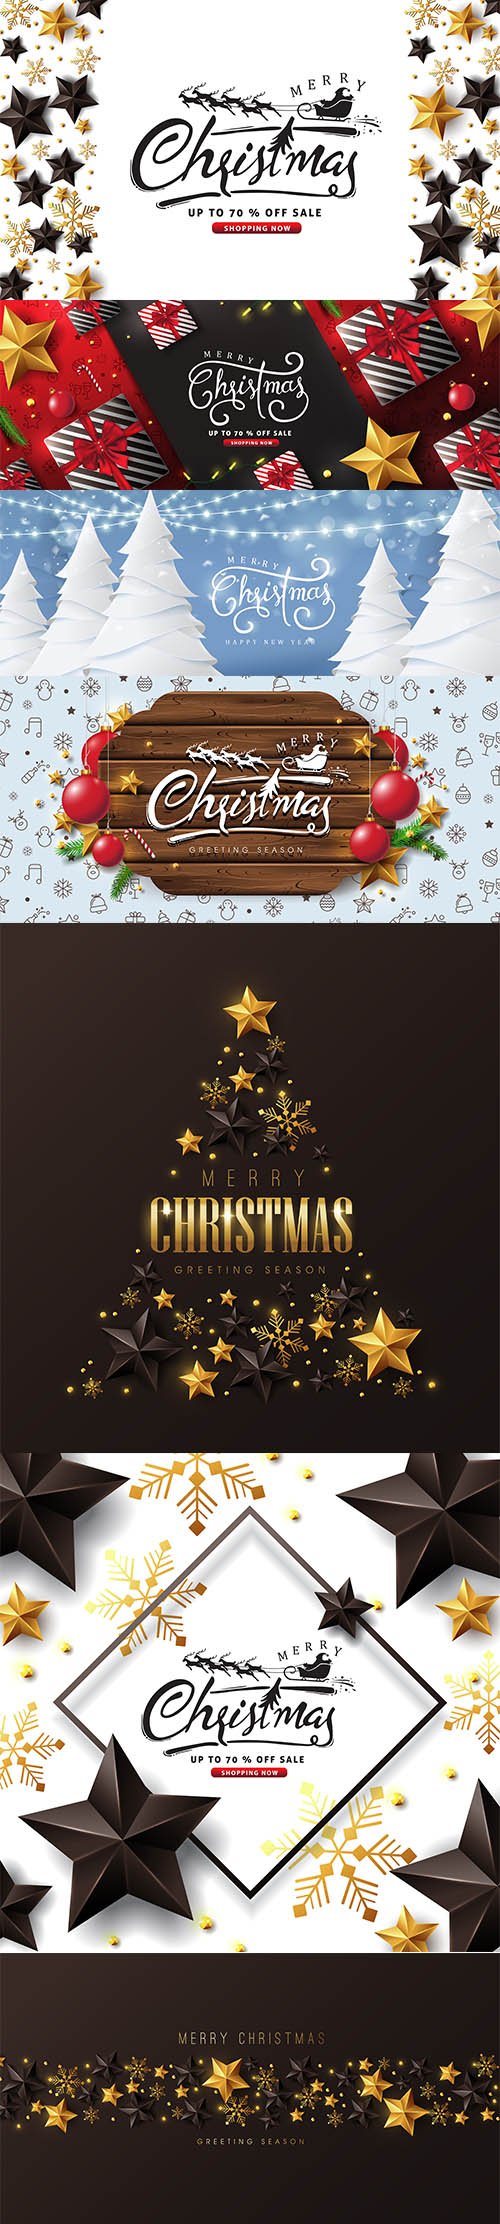 Merry christmas background design